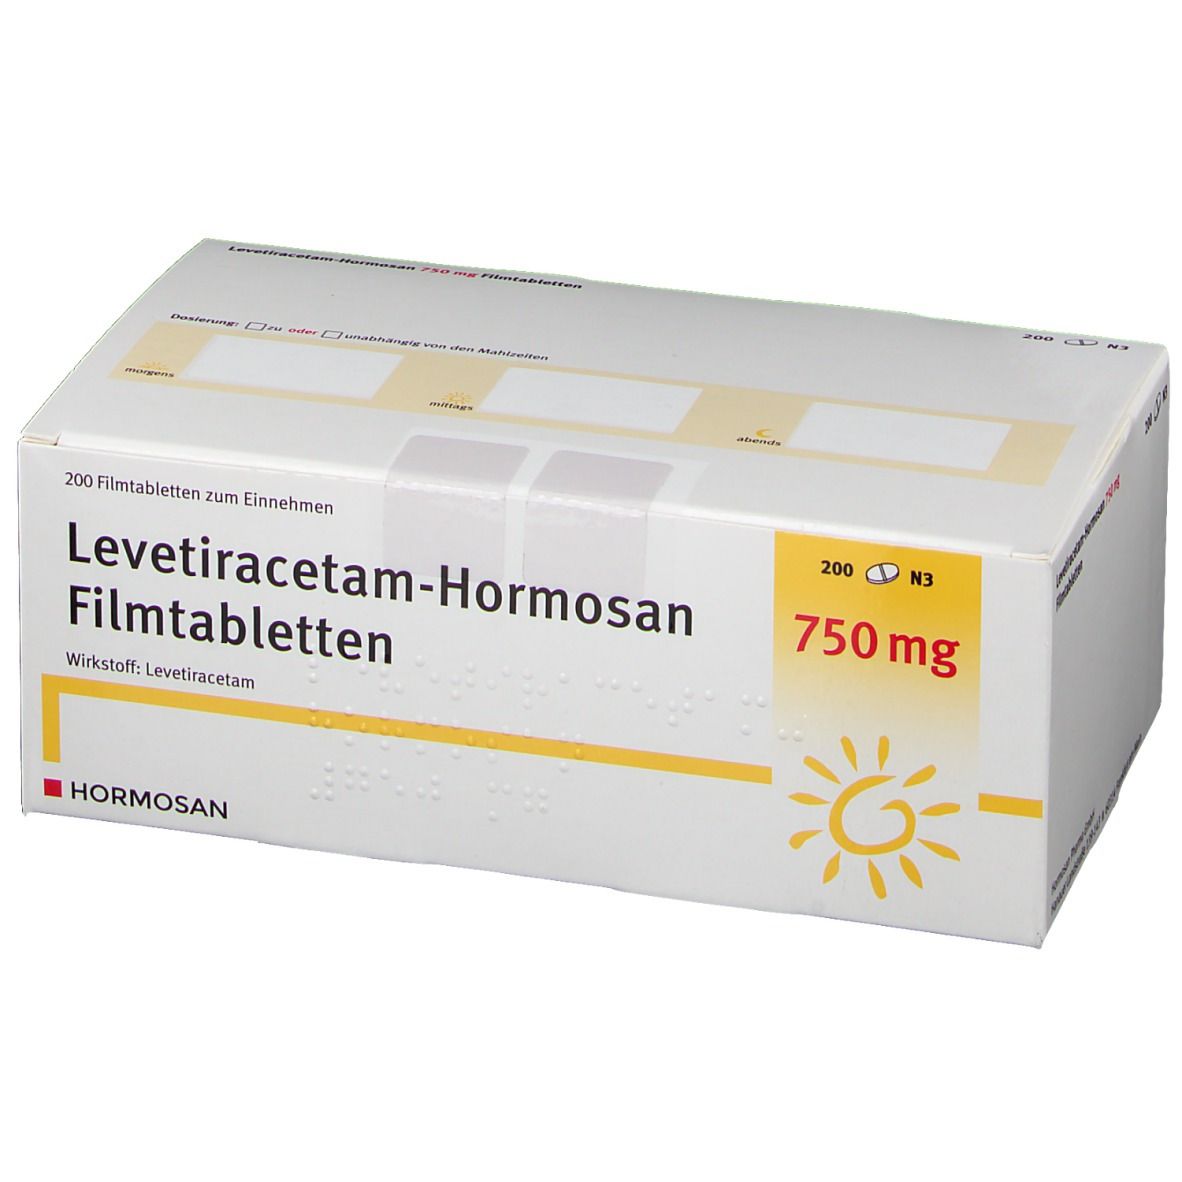 Levetiracetam-Hormosan 750 mg